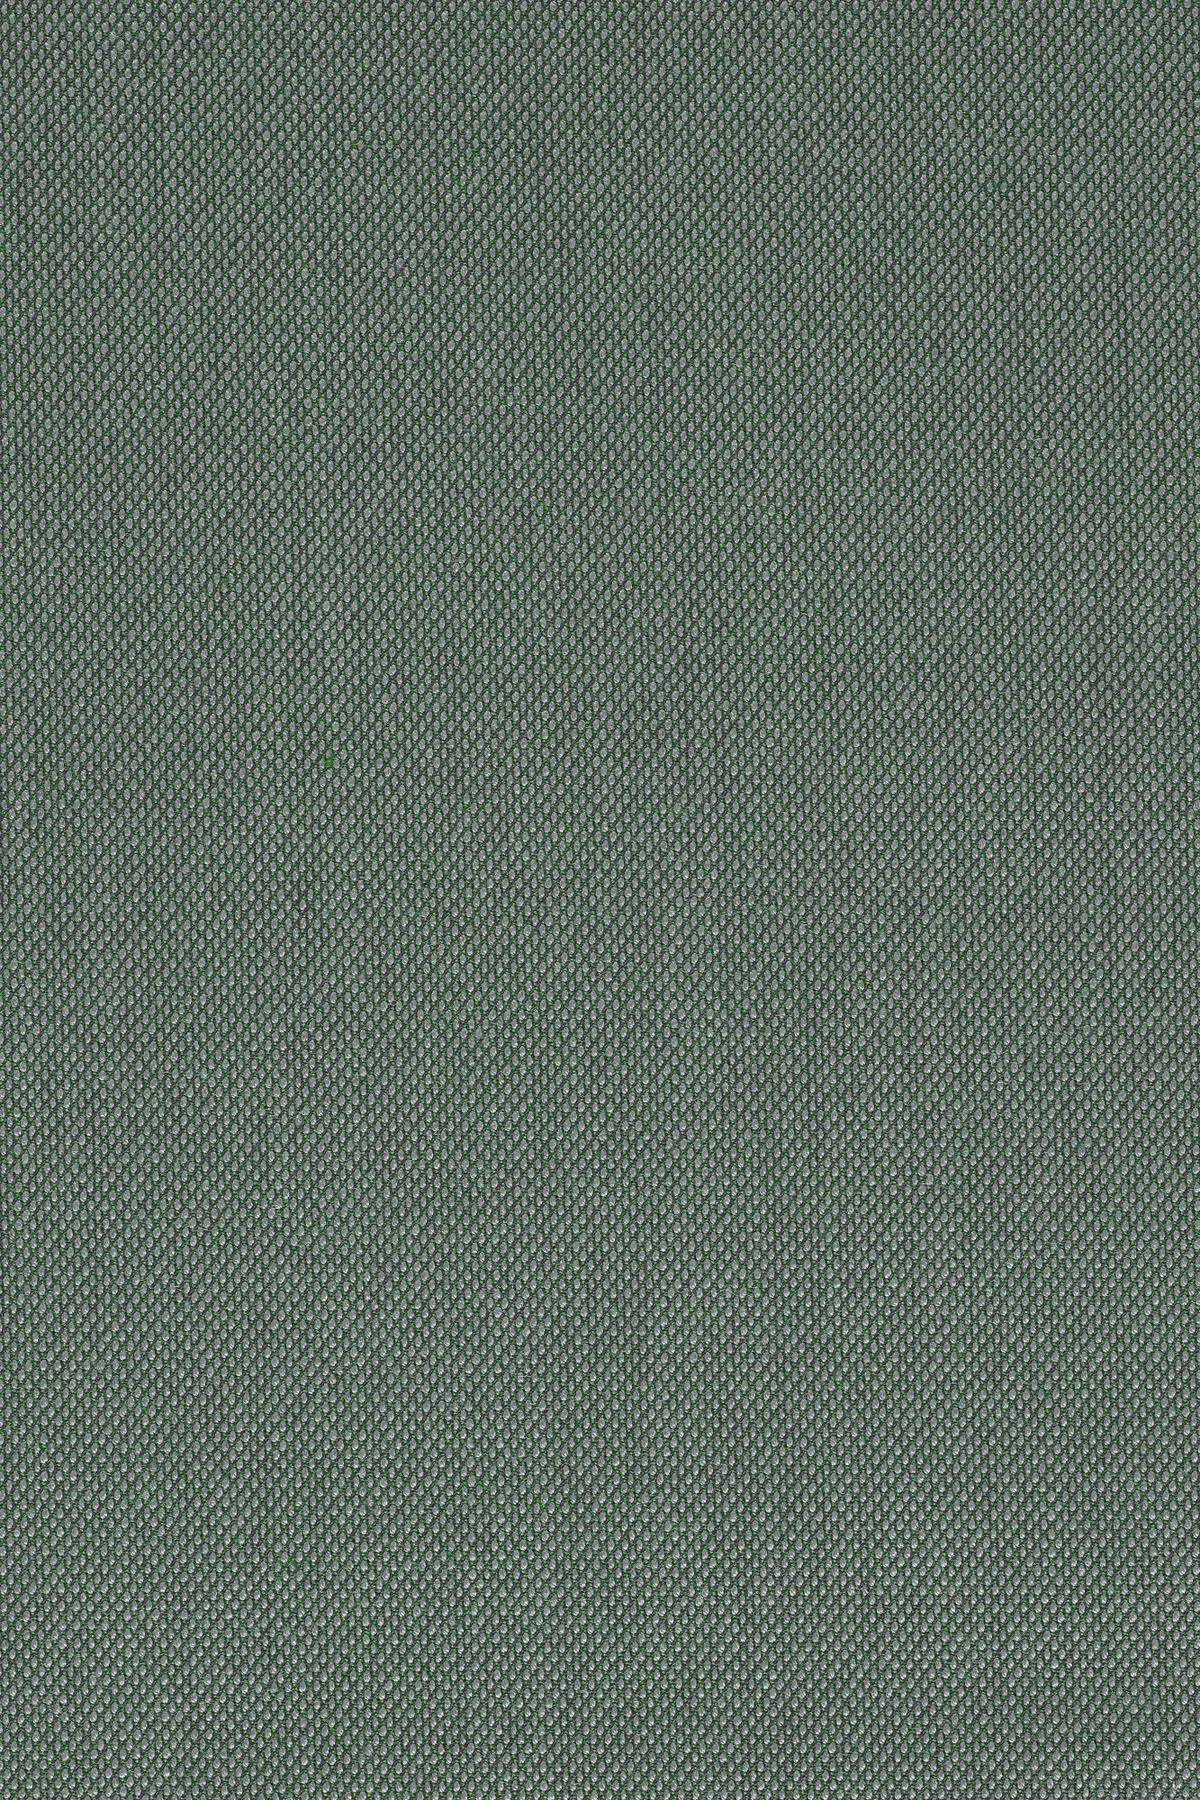 Fabric sample Steelcut Trio 3 966 green